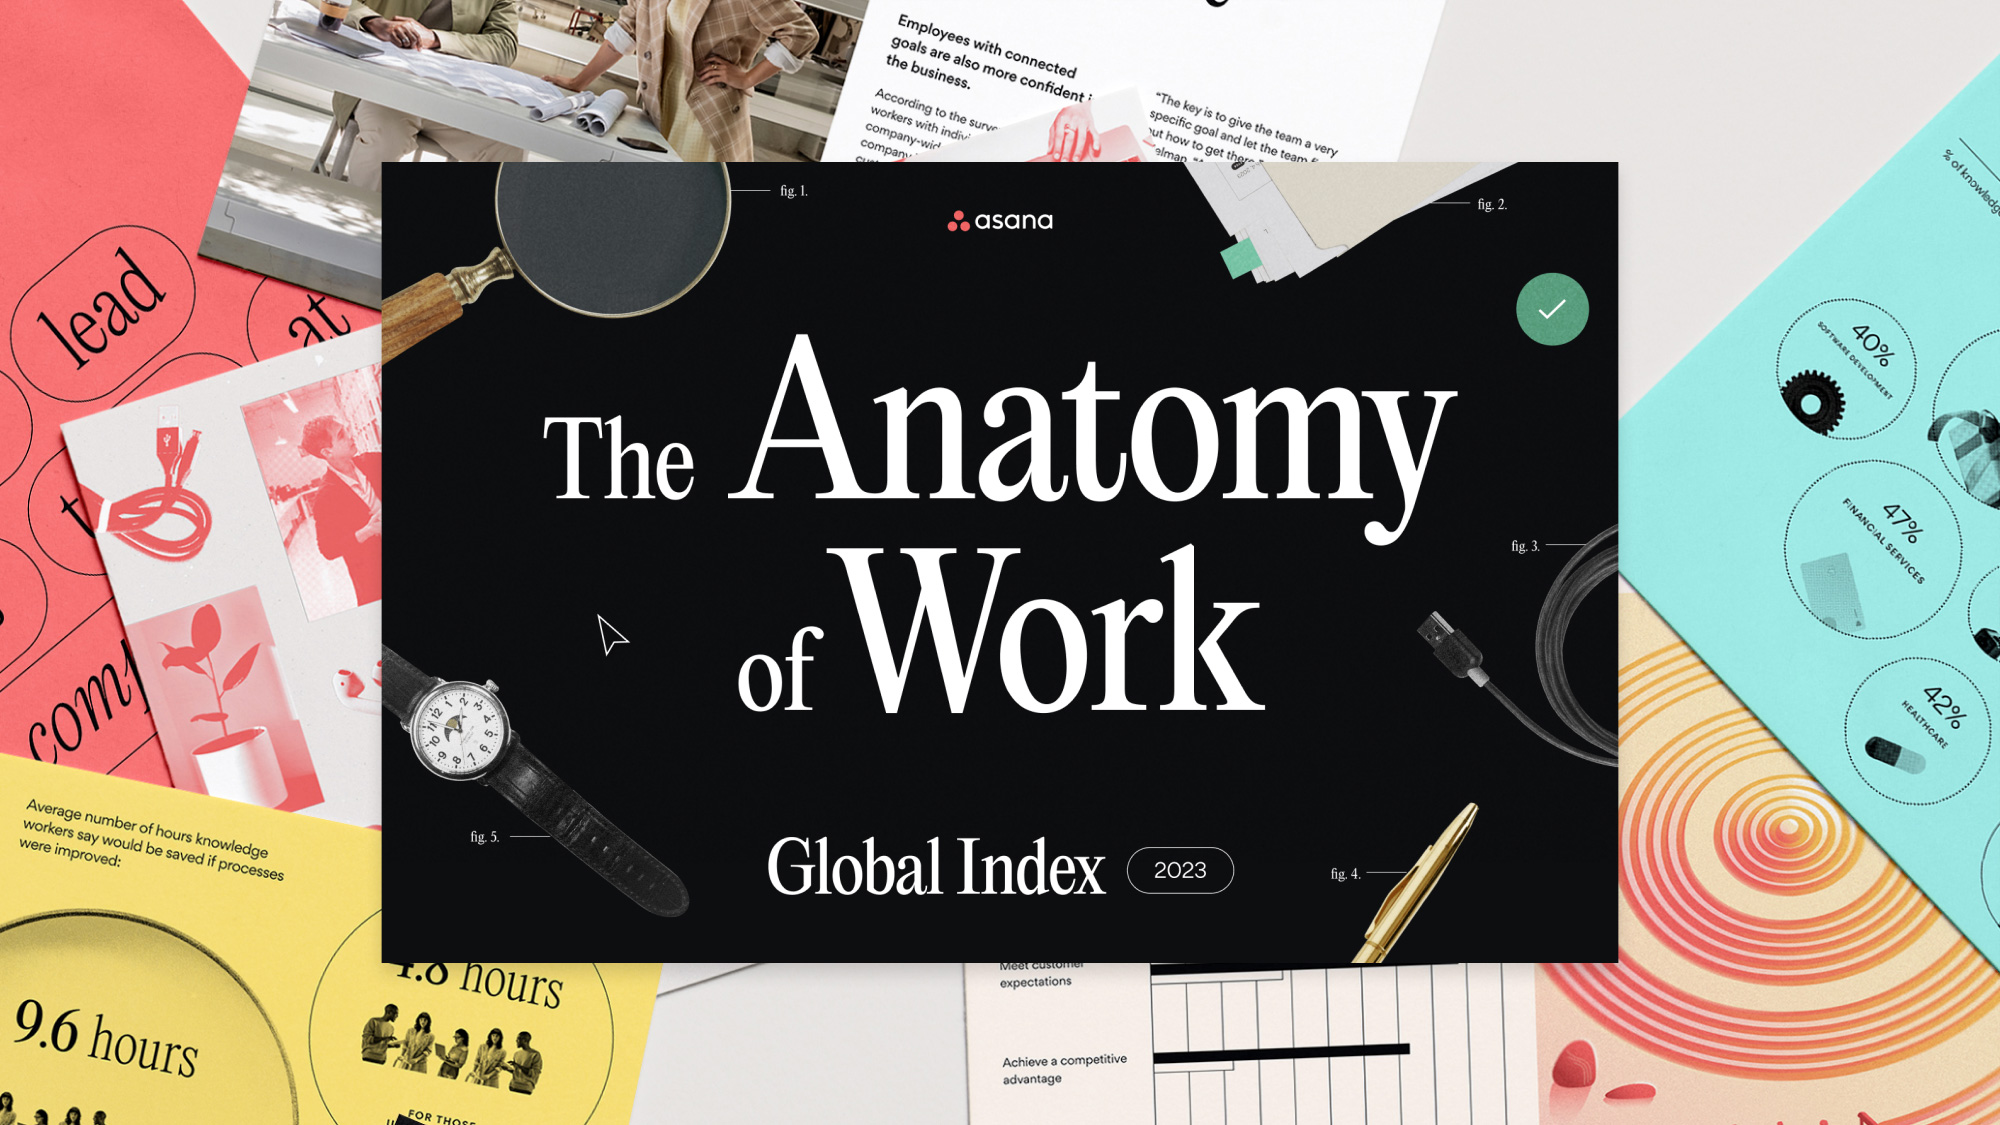 The Anatomy of Work global index